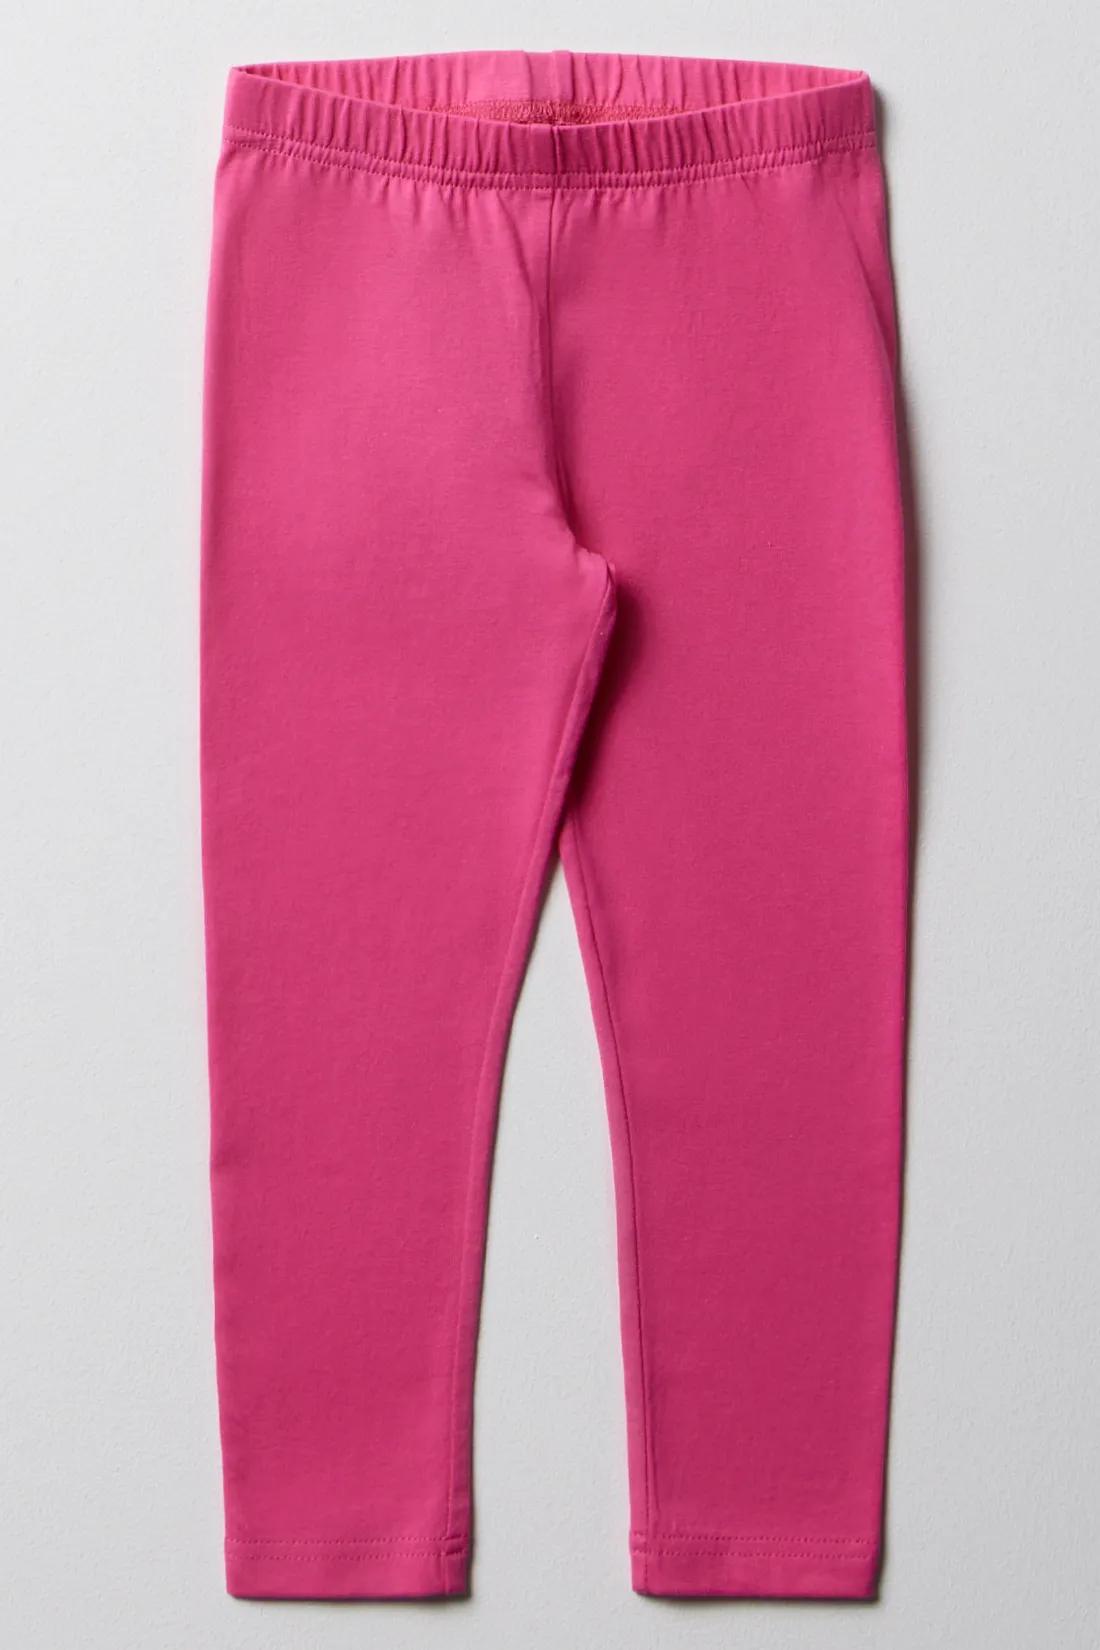 Long leggings pink - GIRLS 2-8 YEARS Bottoms & Jeans | Ackermans